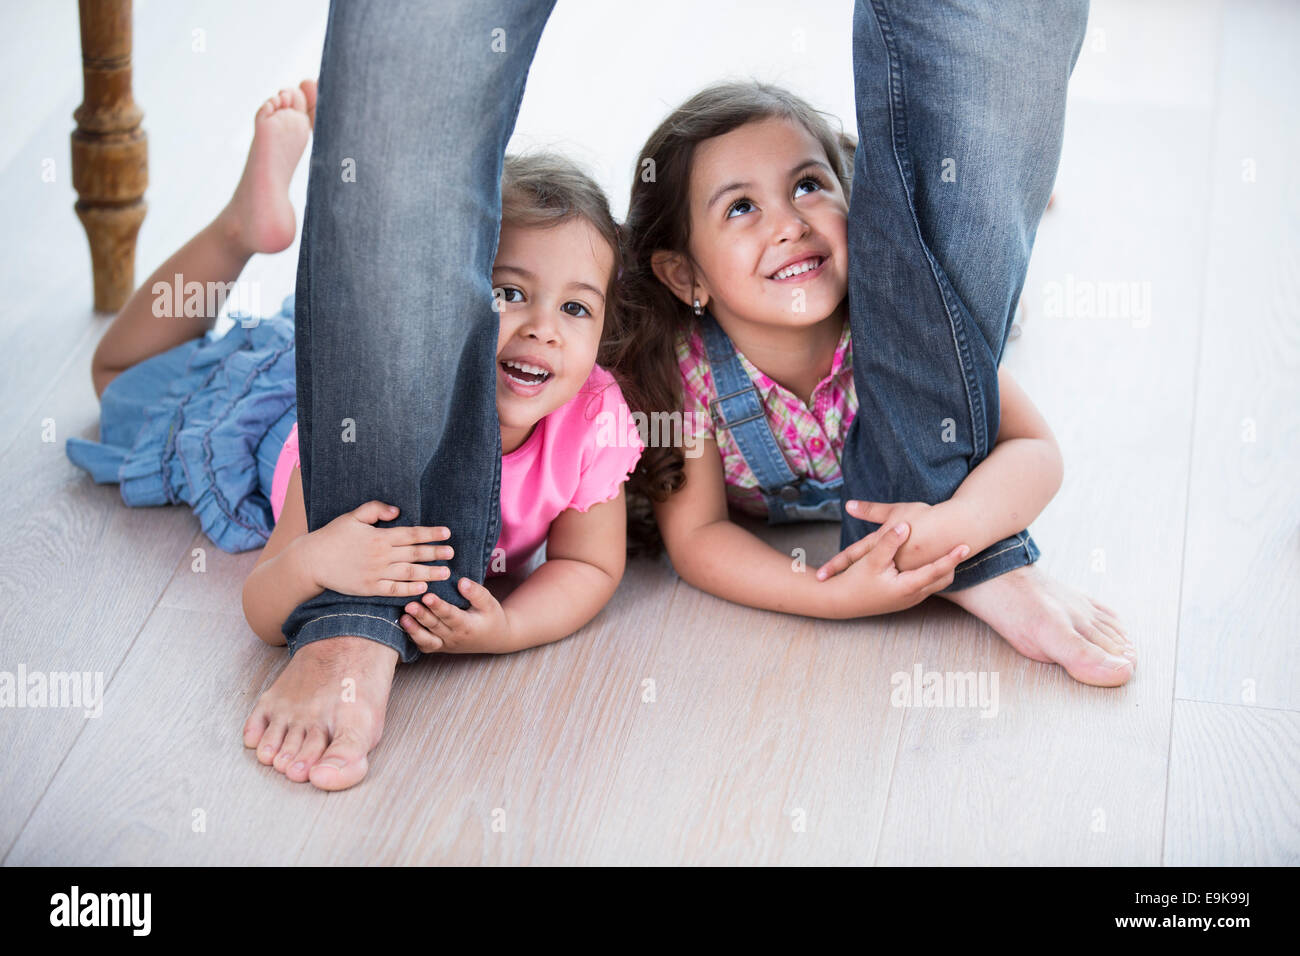 Playful girls holding father's legs on hardwood floor Stock Photo